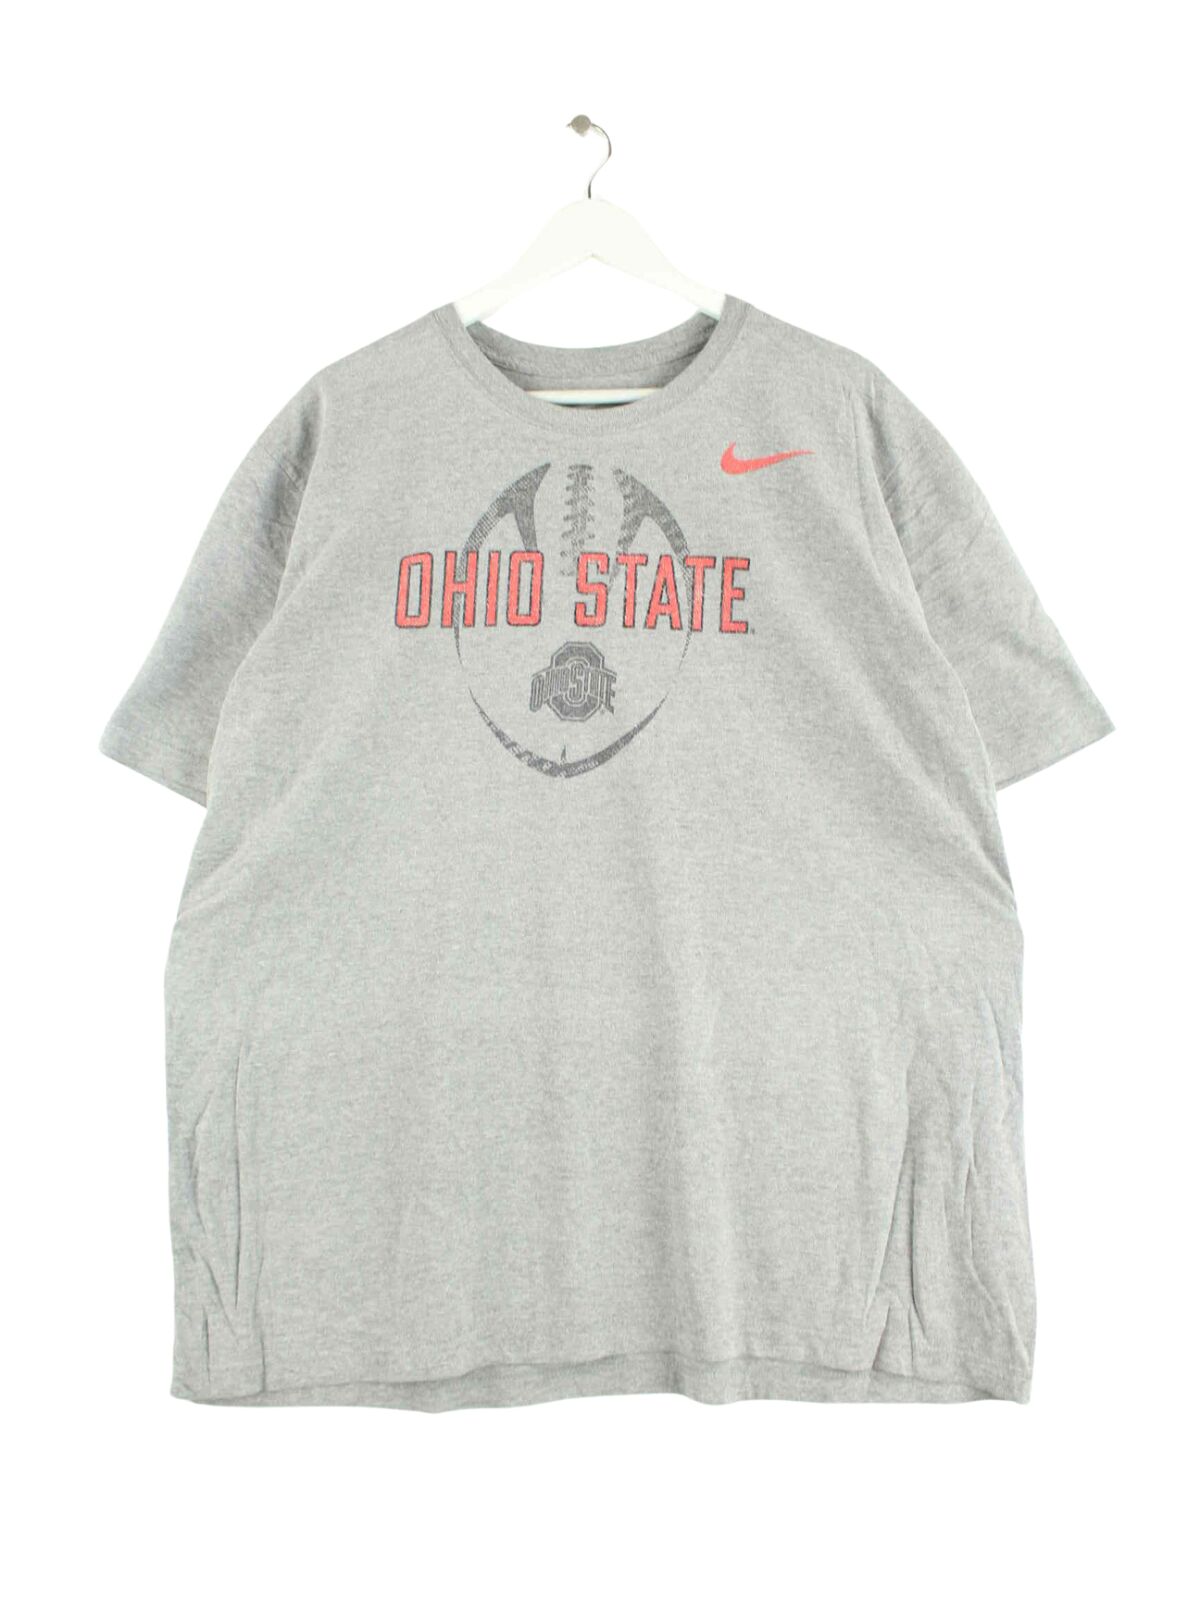 Nike Ohio State Print T-Shirt Grau XXL (front image)